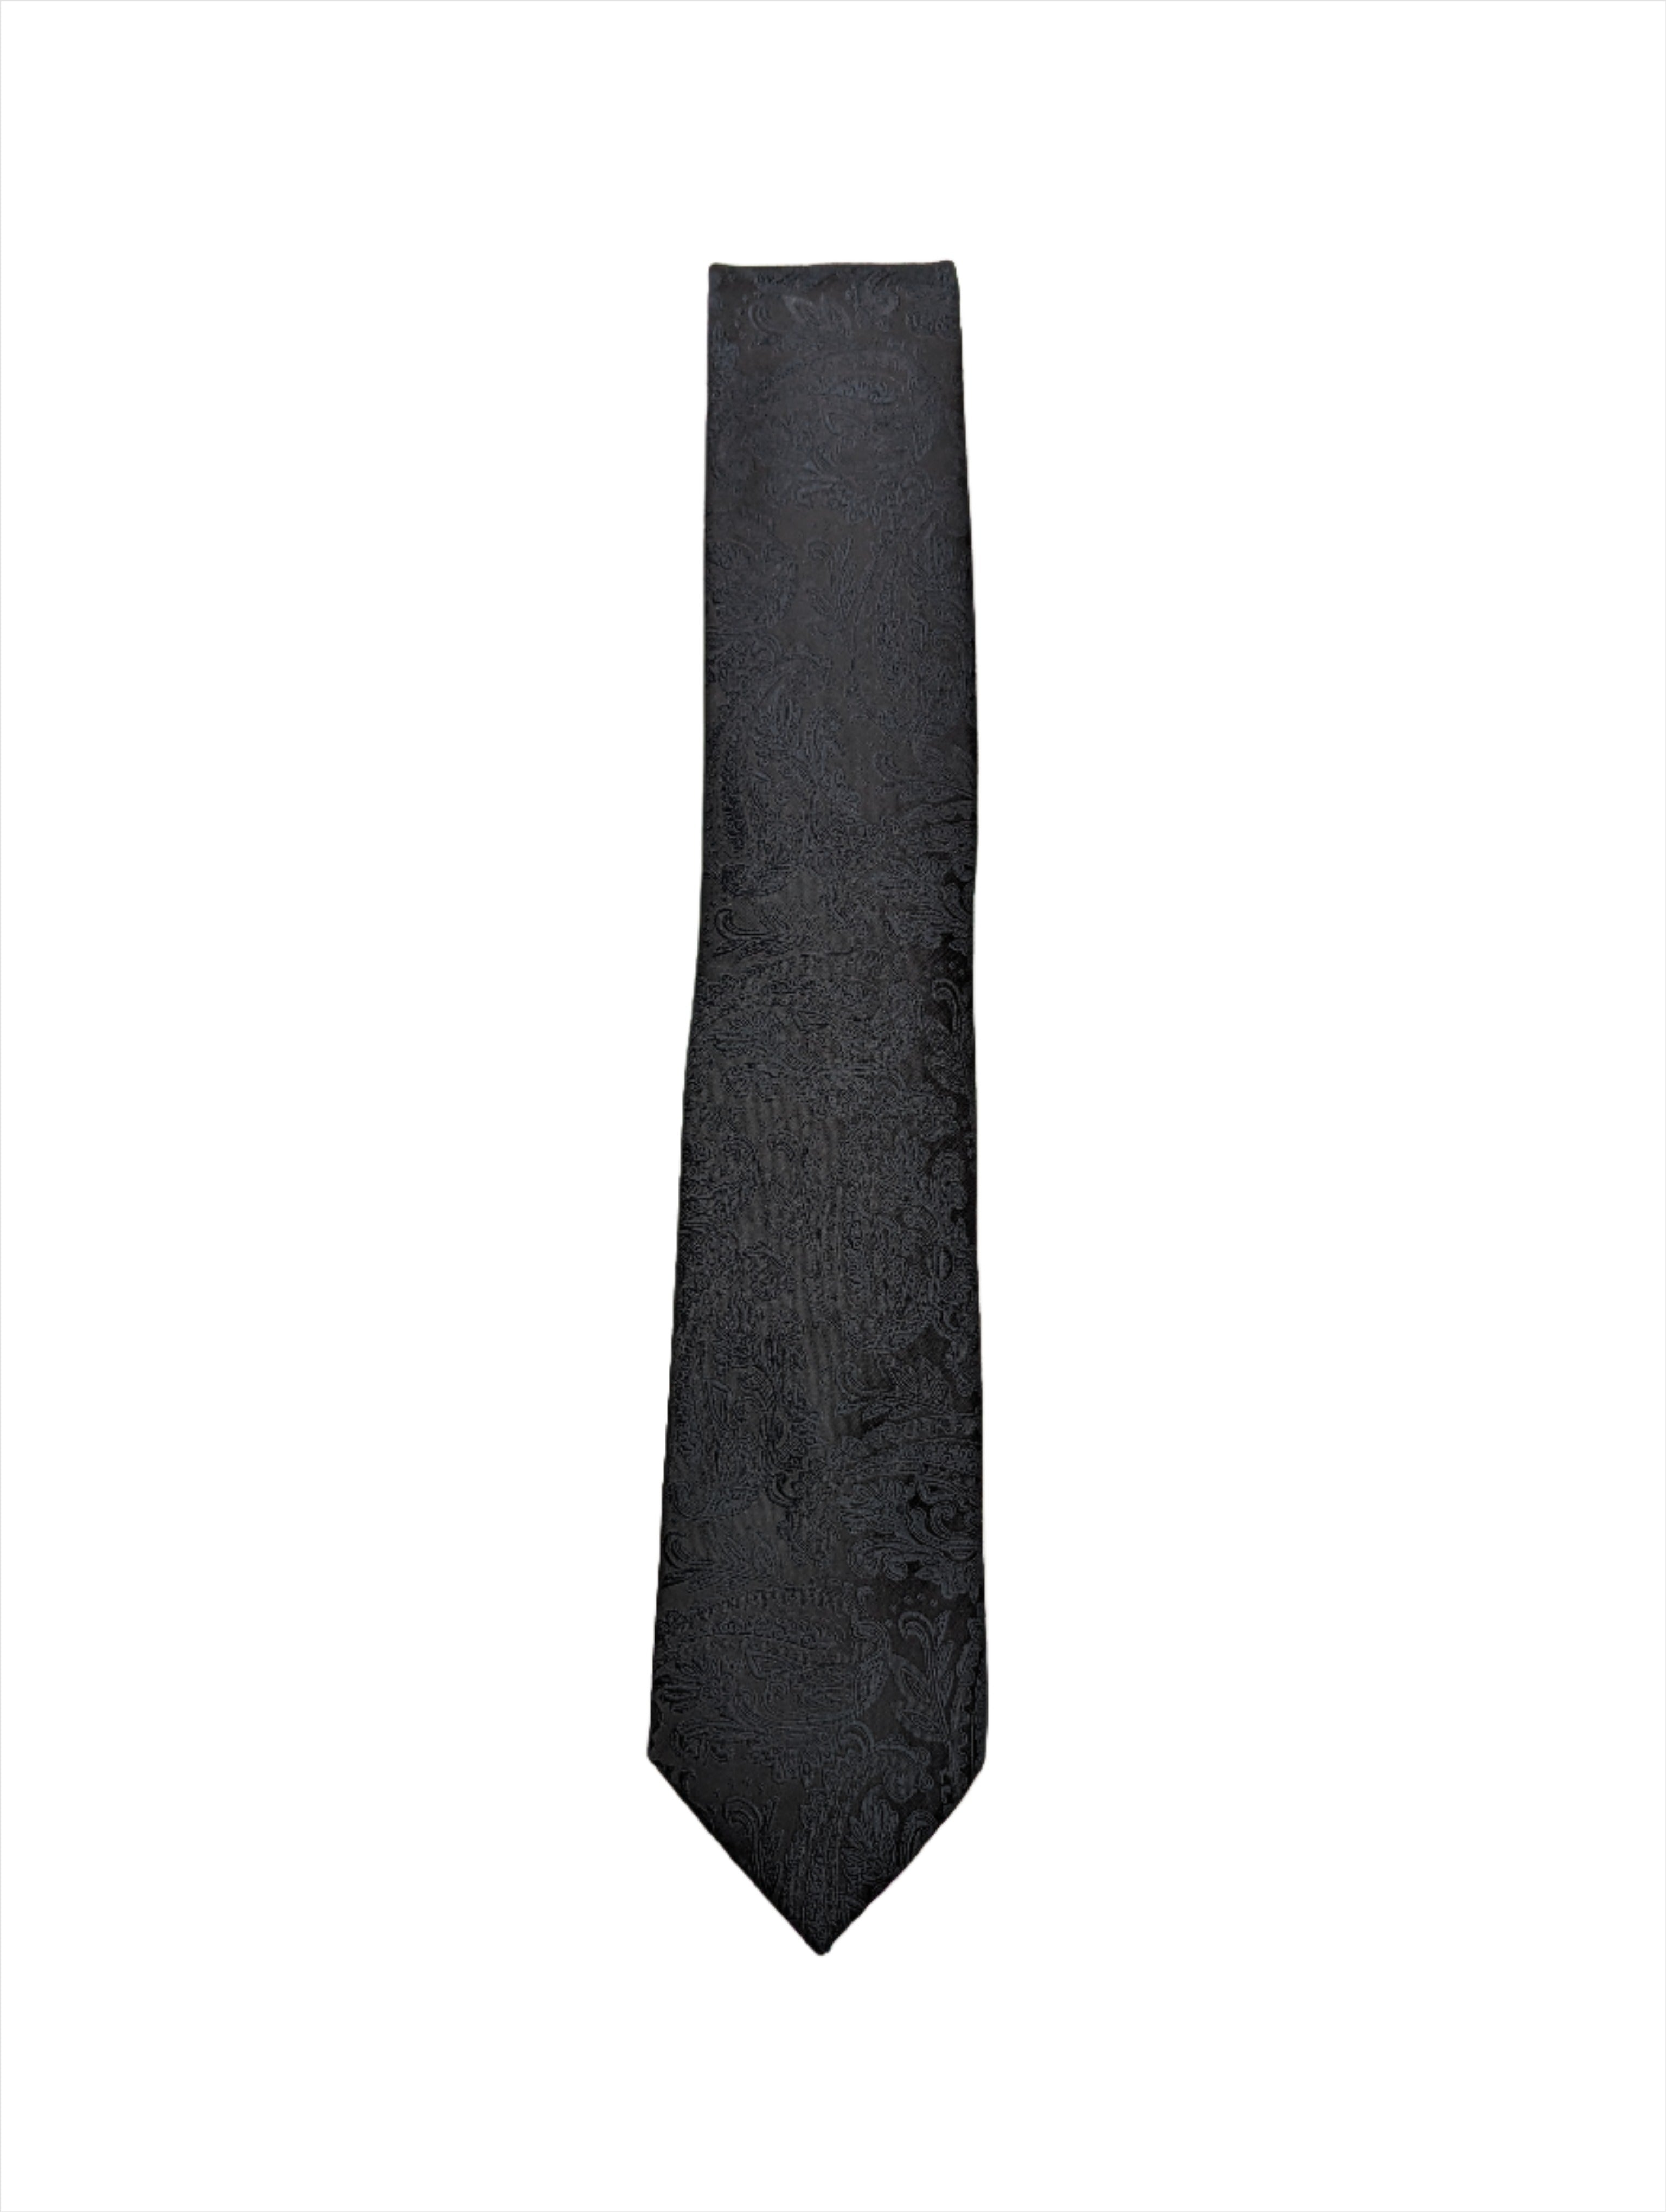 Men's Paisley Tie - Black